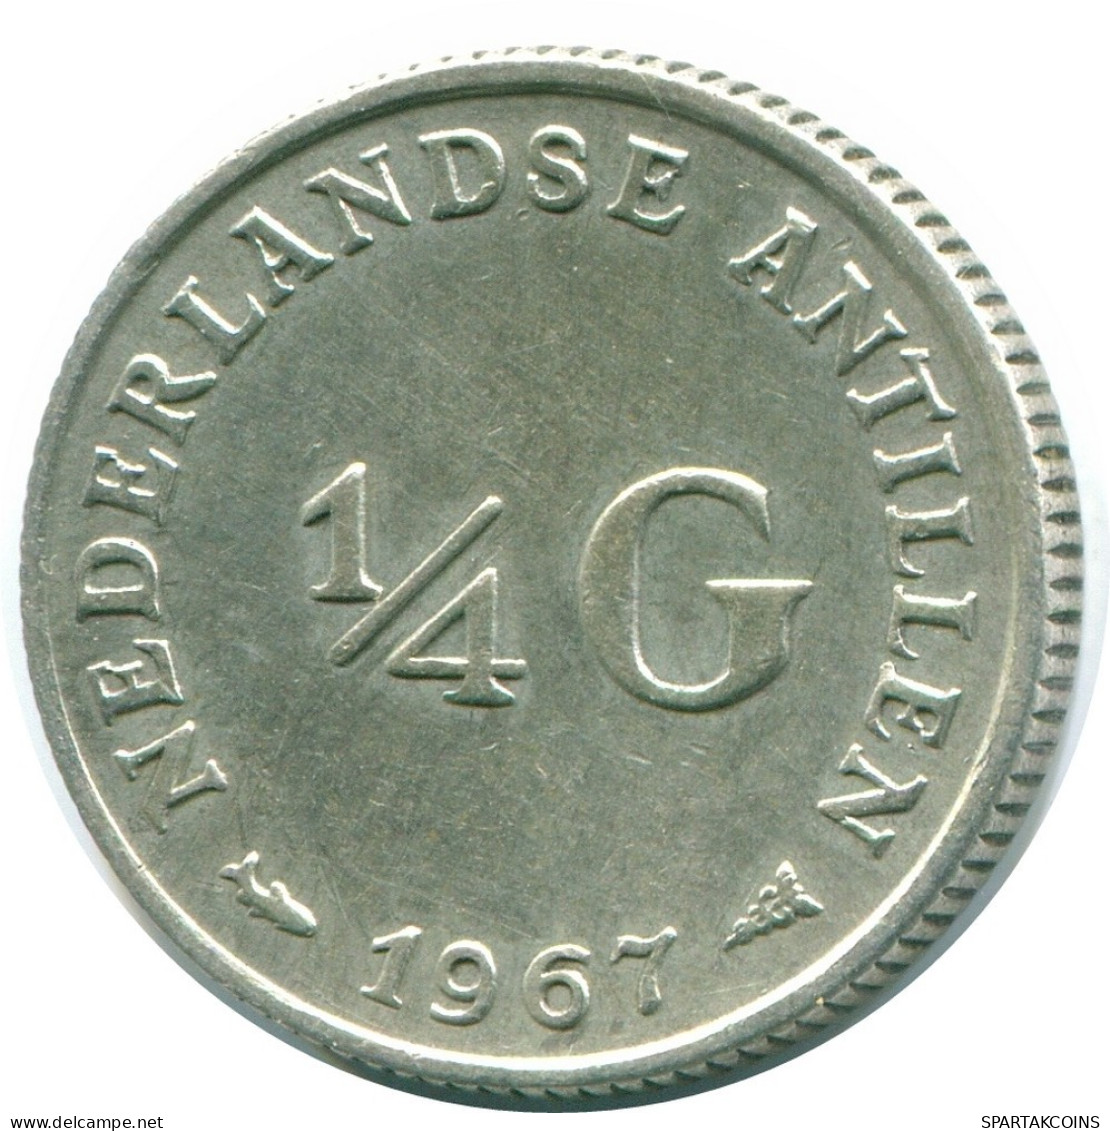 1/4 GULDEN 1967 NIEDERLÄNDISCHE ANTILLEN SILBER Koloniale Münze #NL11463.4.D.A - Netherlands Antilles